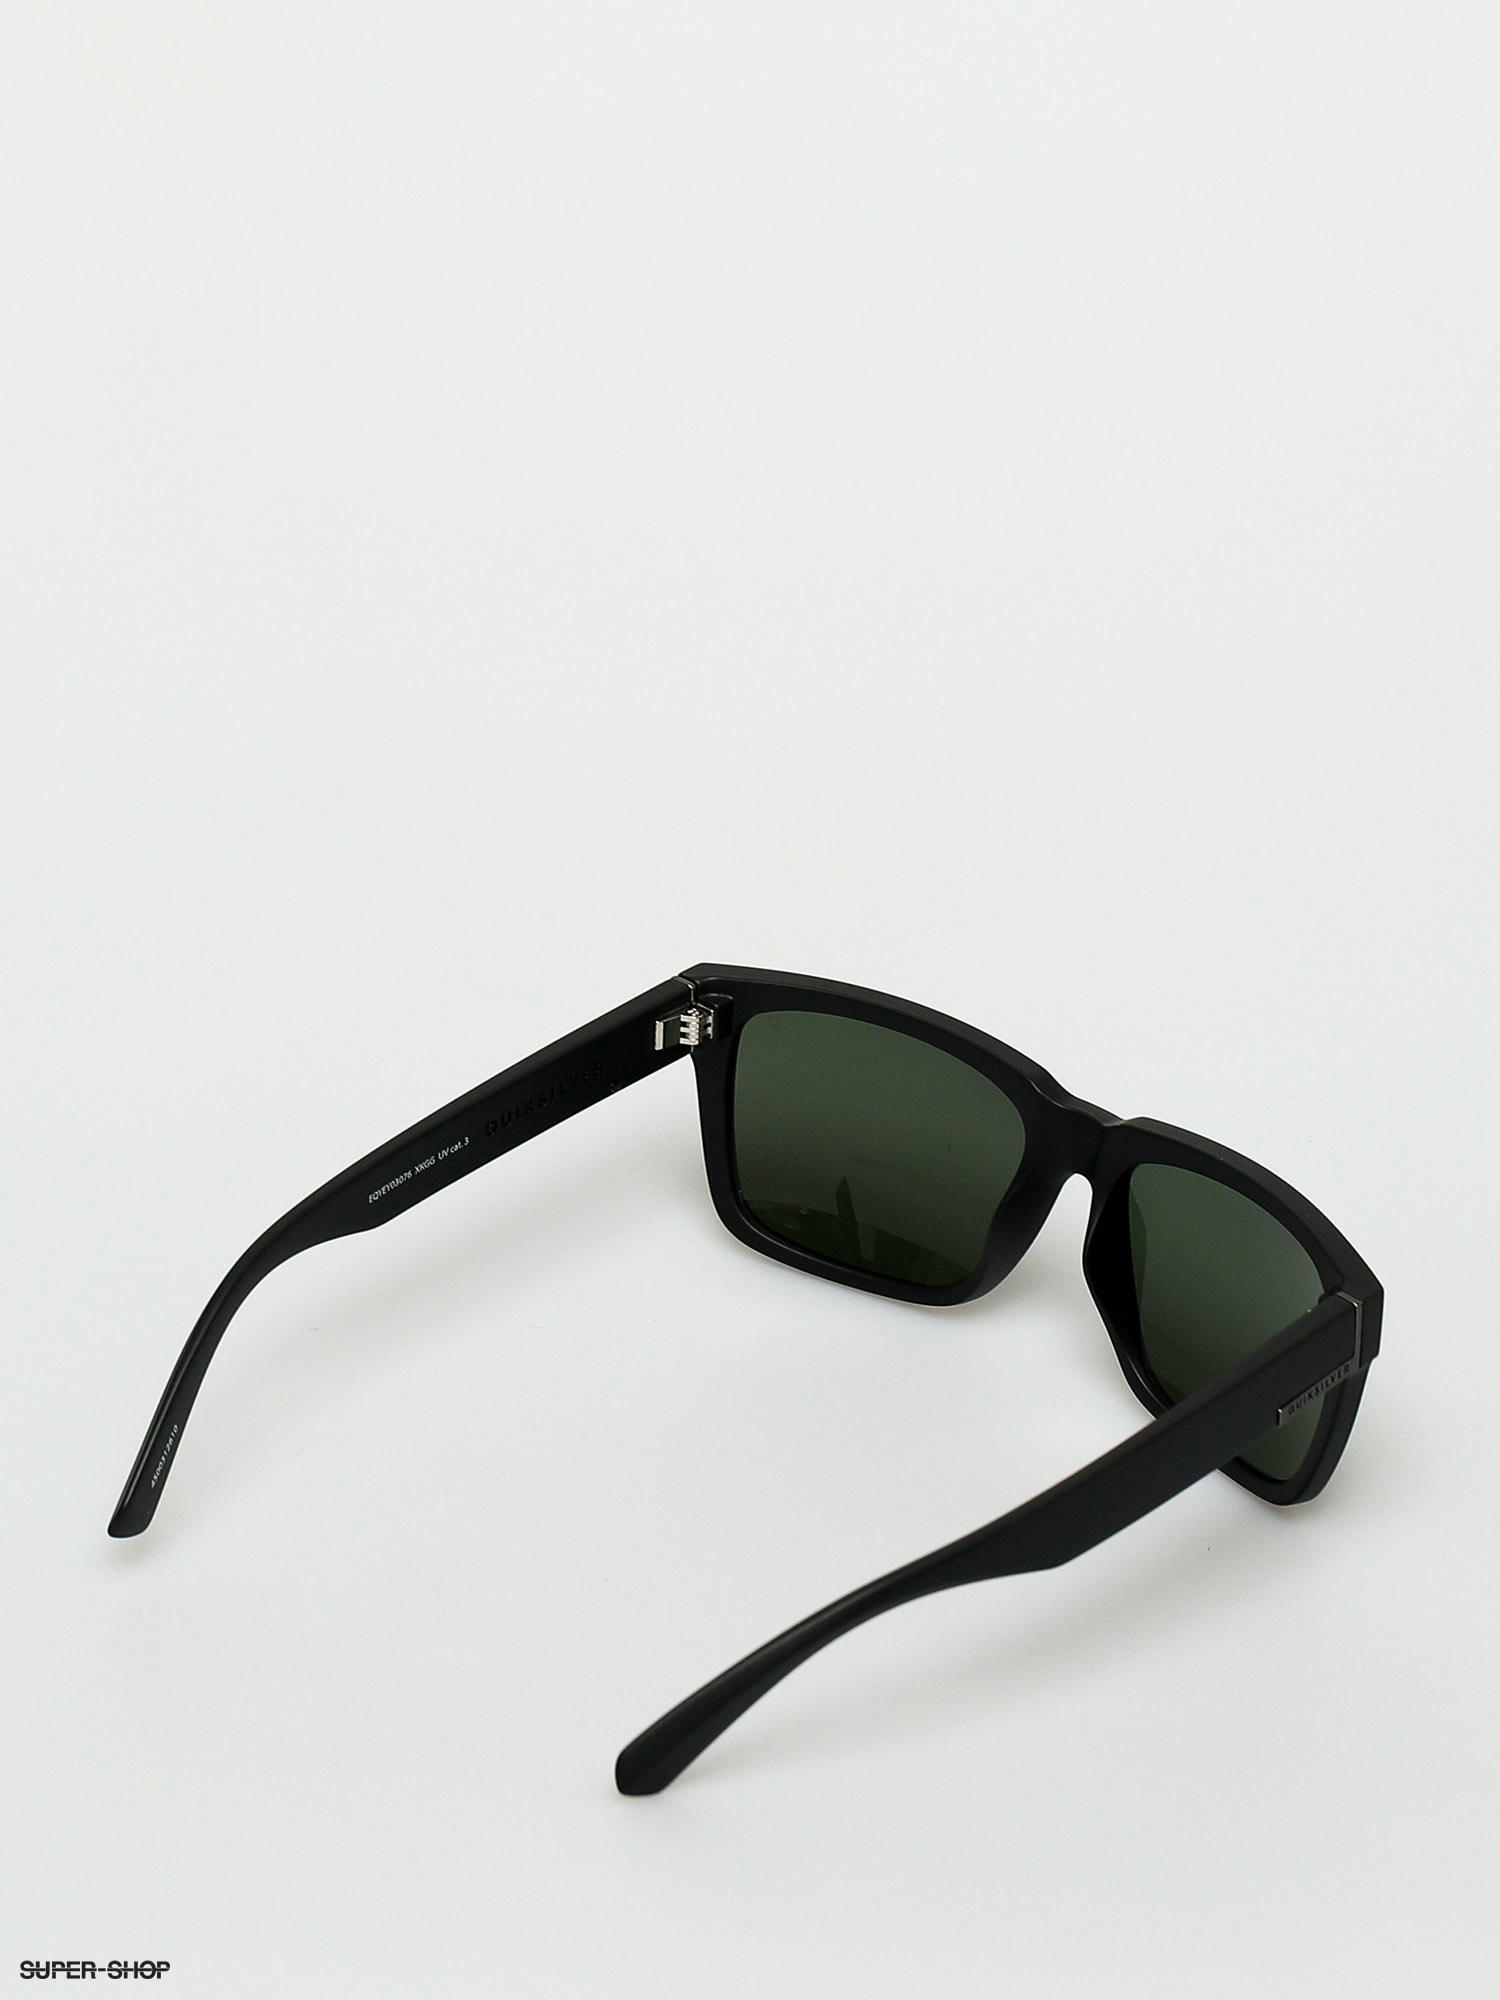 Quiksilver Bruiser Polarized Sunglasses black/green p) (matte